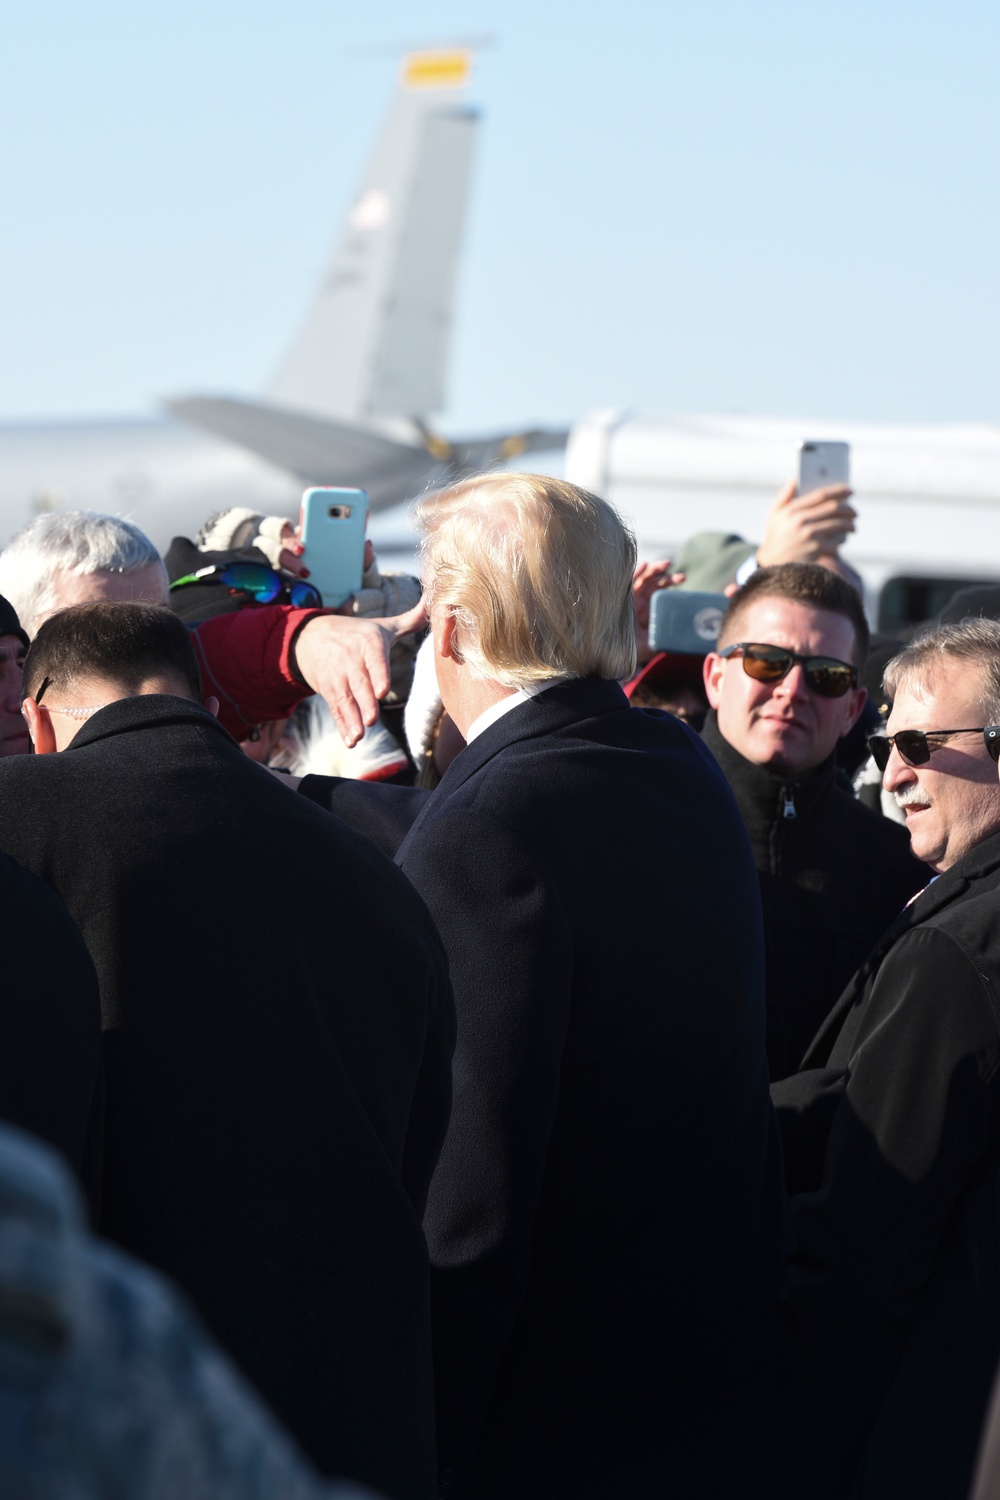 President Trump Arrives at 171st